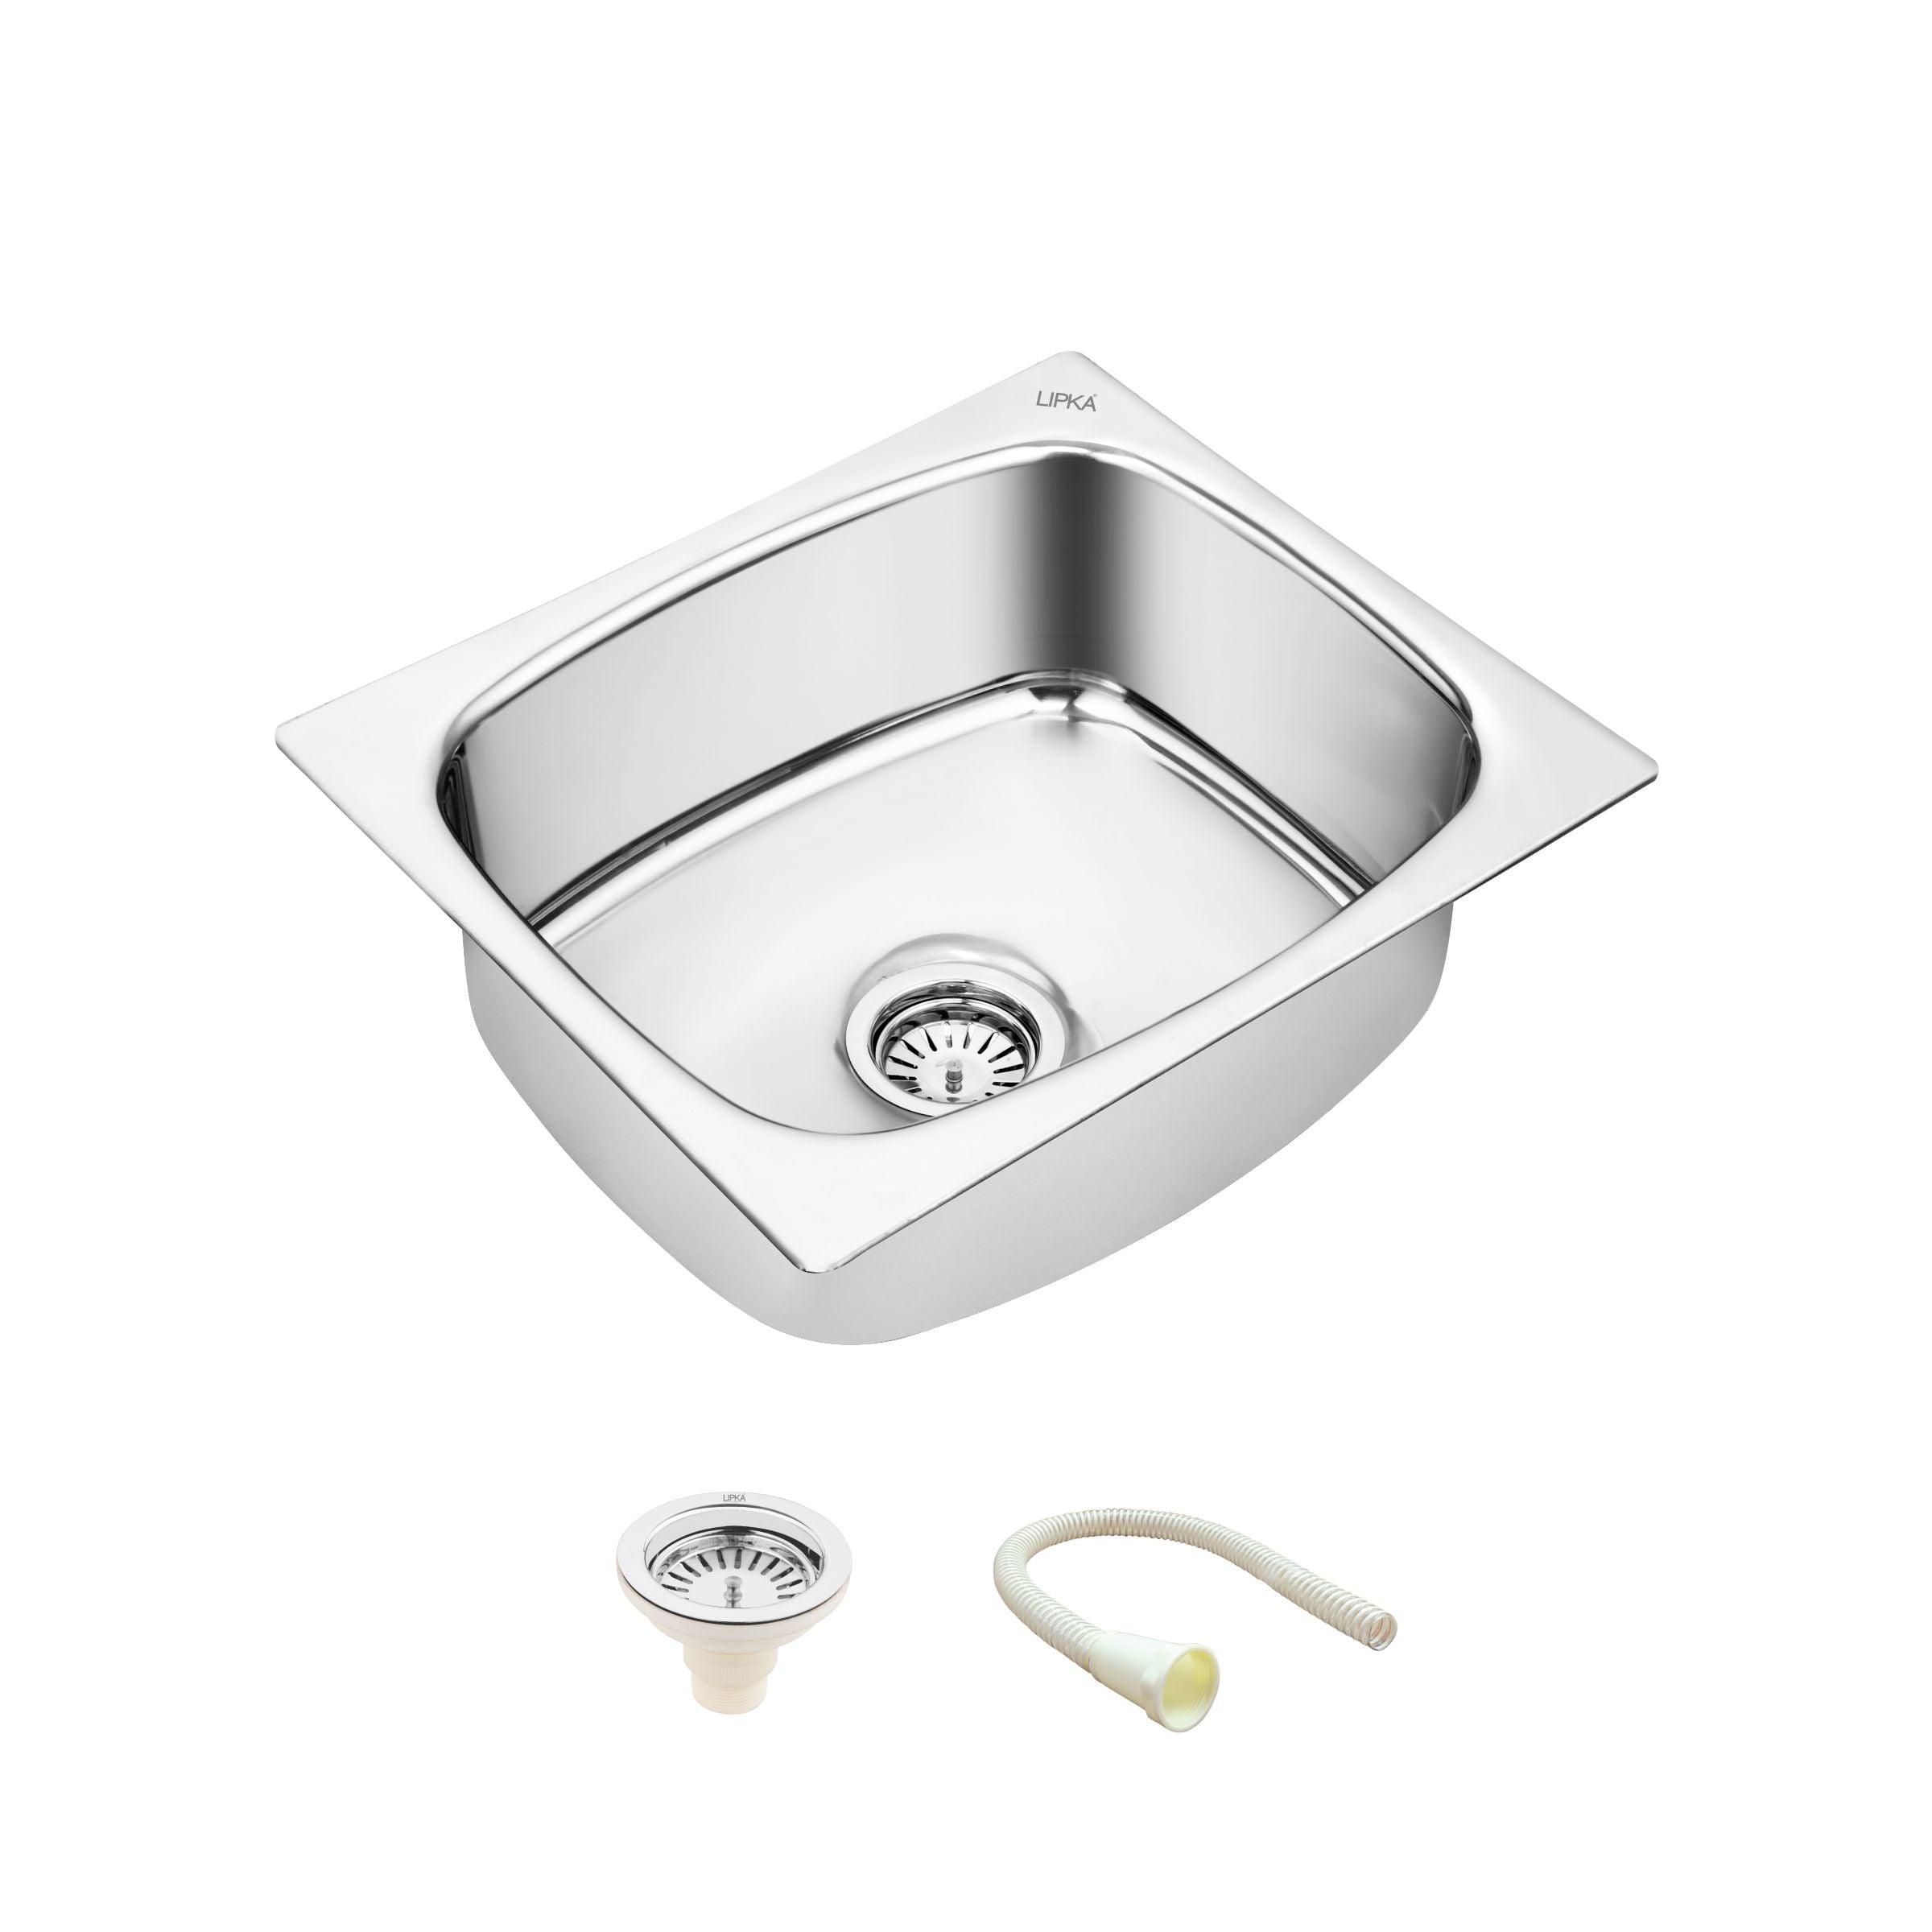 Silver Range Round Single Bowl Kitchen Sink (20 x 17 x 8 Inches) - LIPKA - Lipka Home